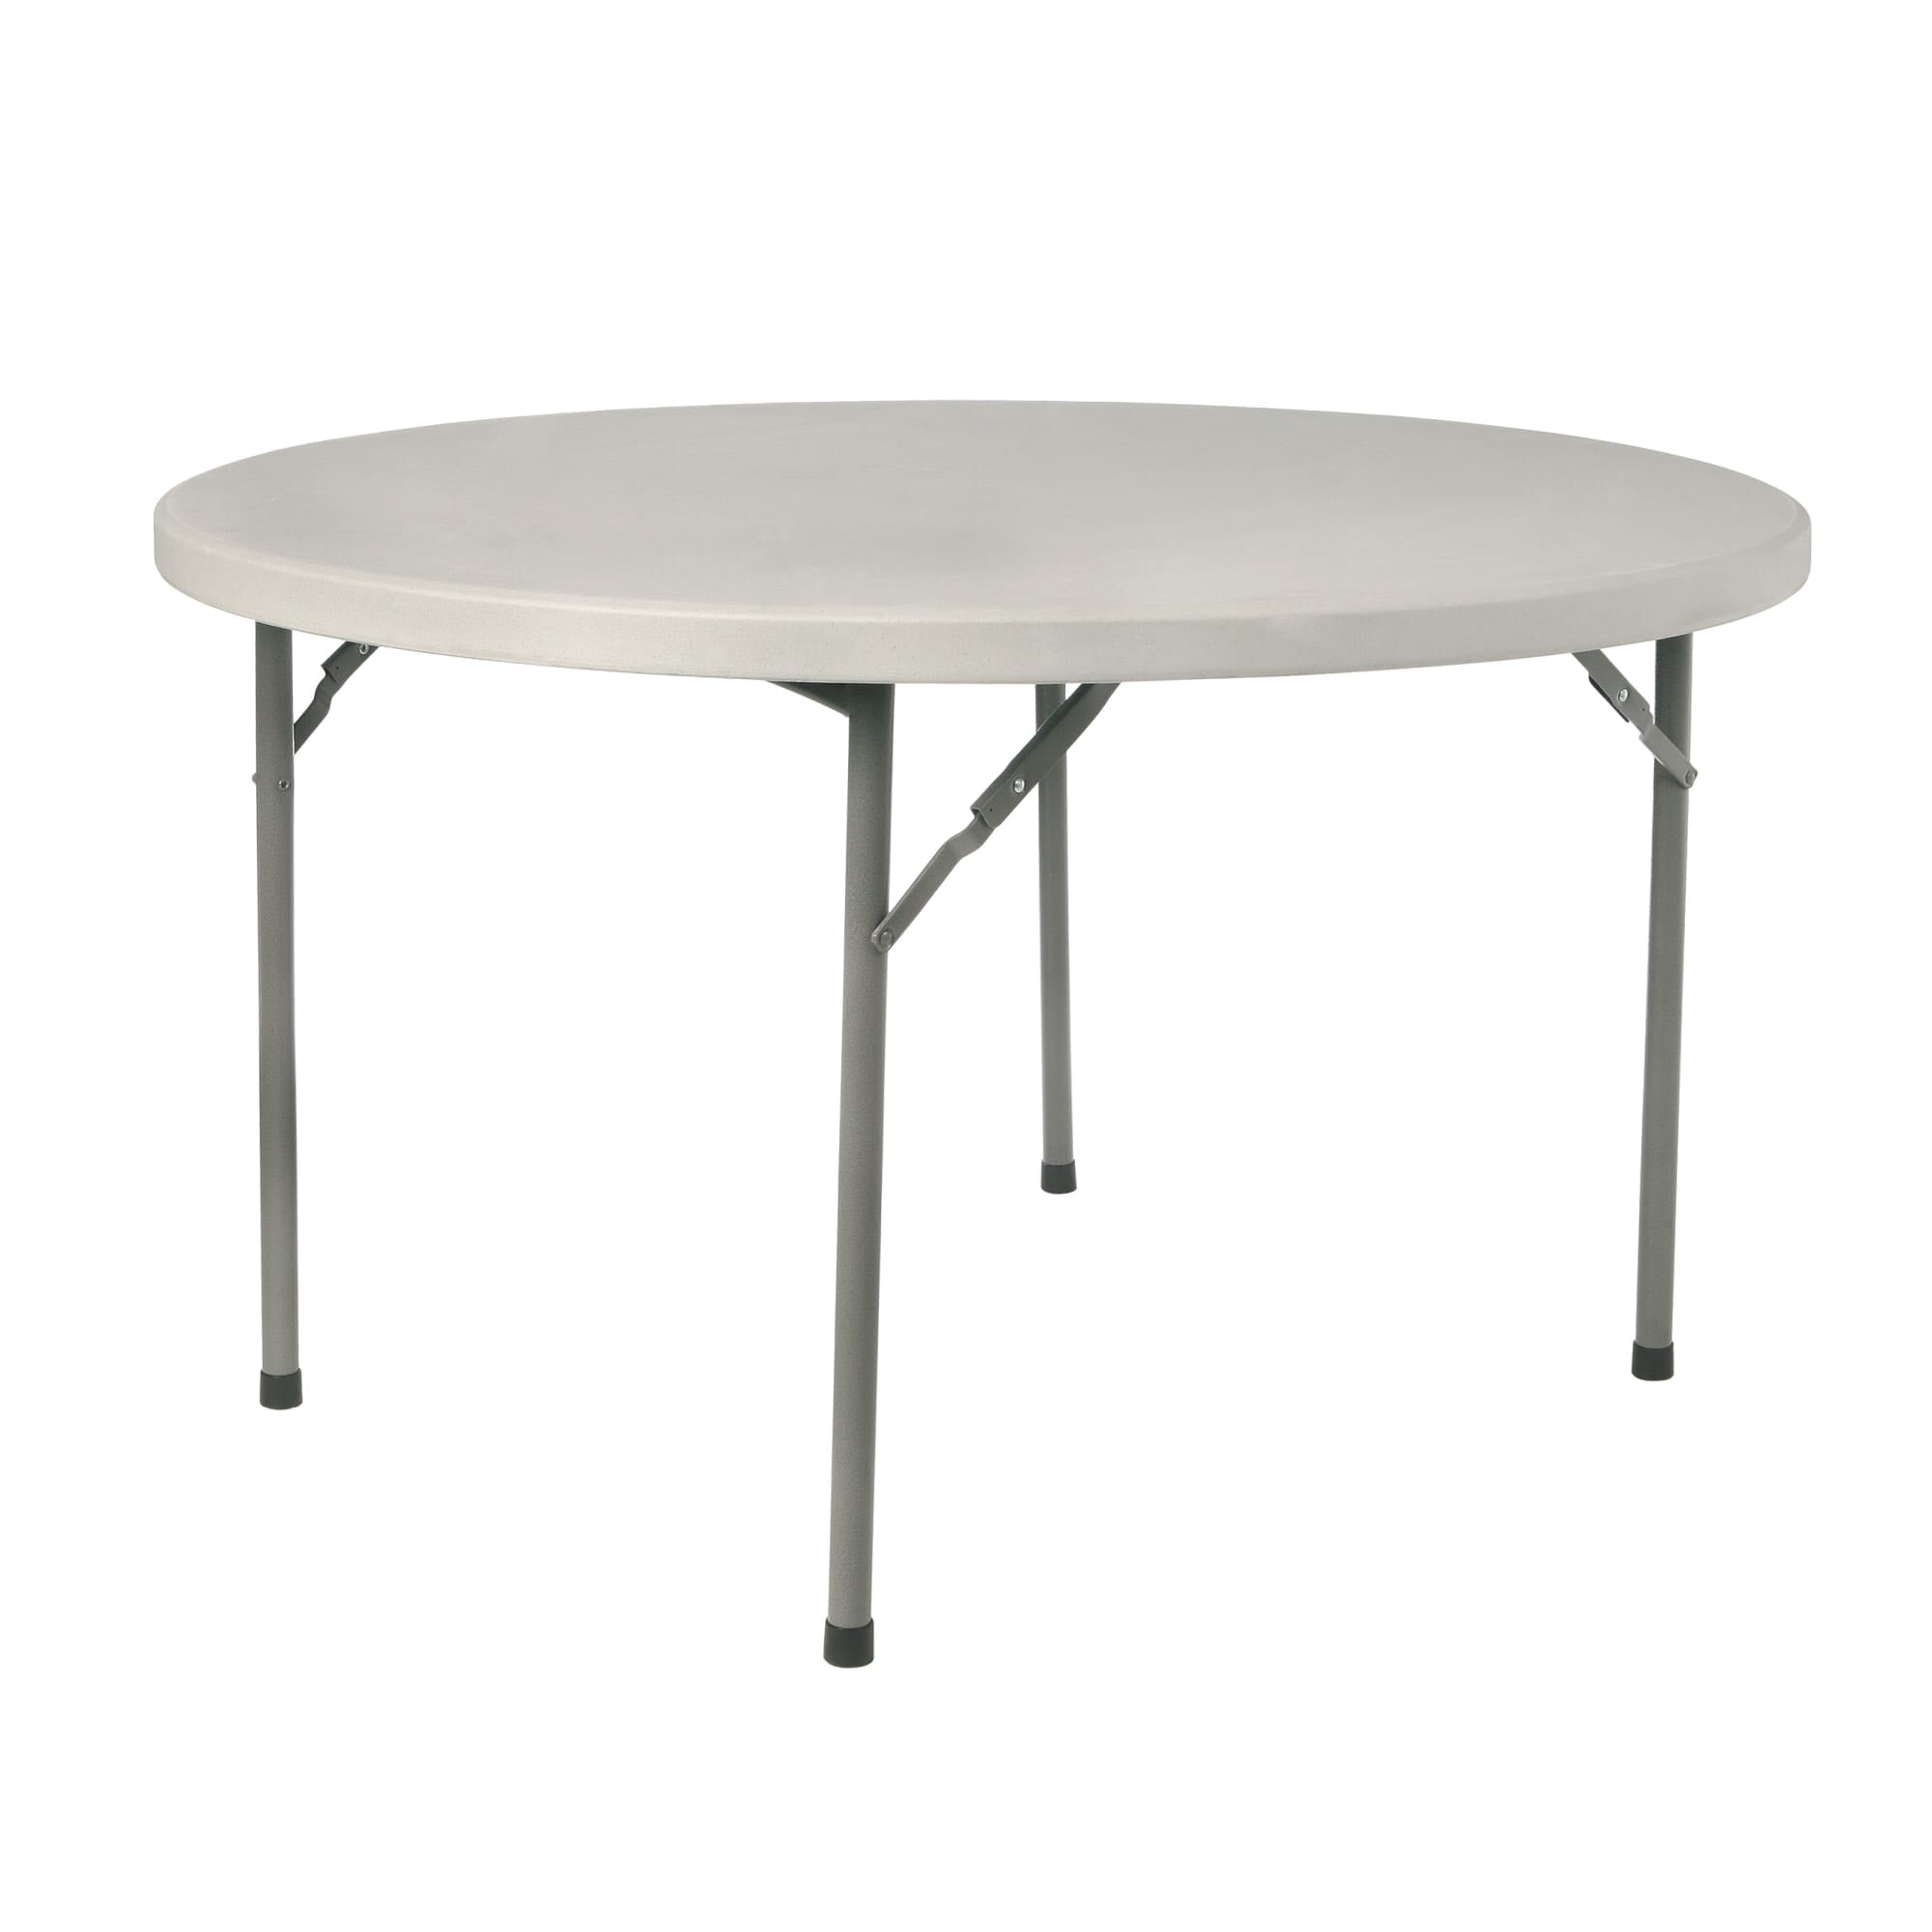 Garbar Rossini round folding table indoors, outdoors Ø122